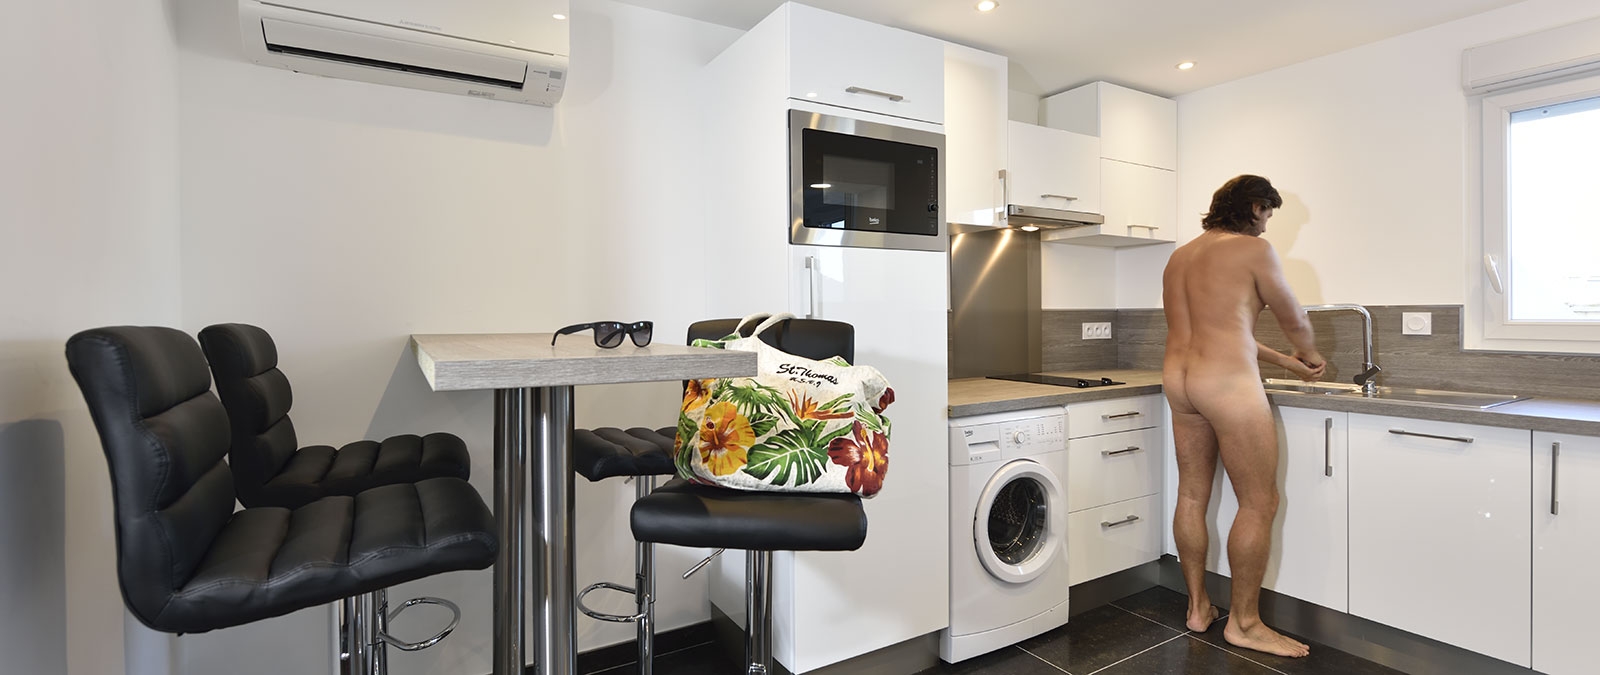 Equipped kitchen Faces naturist studio flat rental